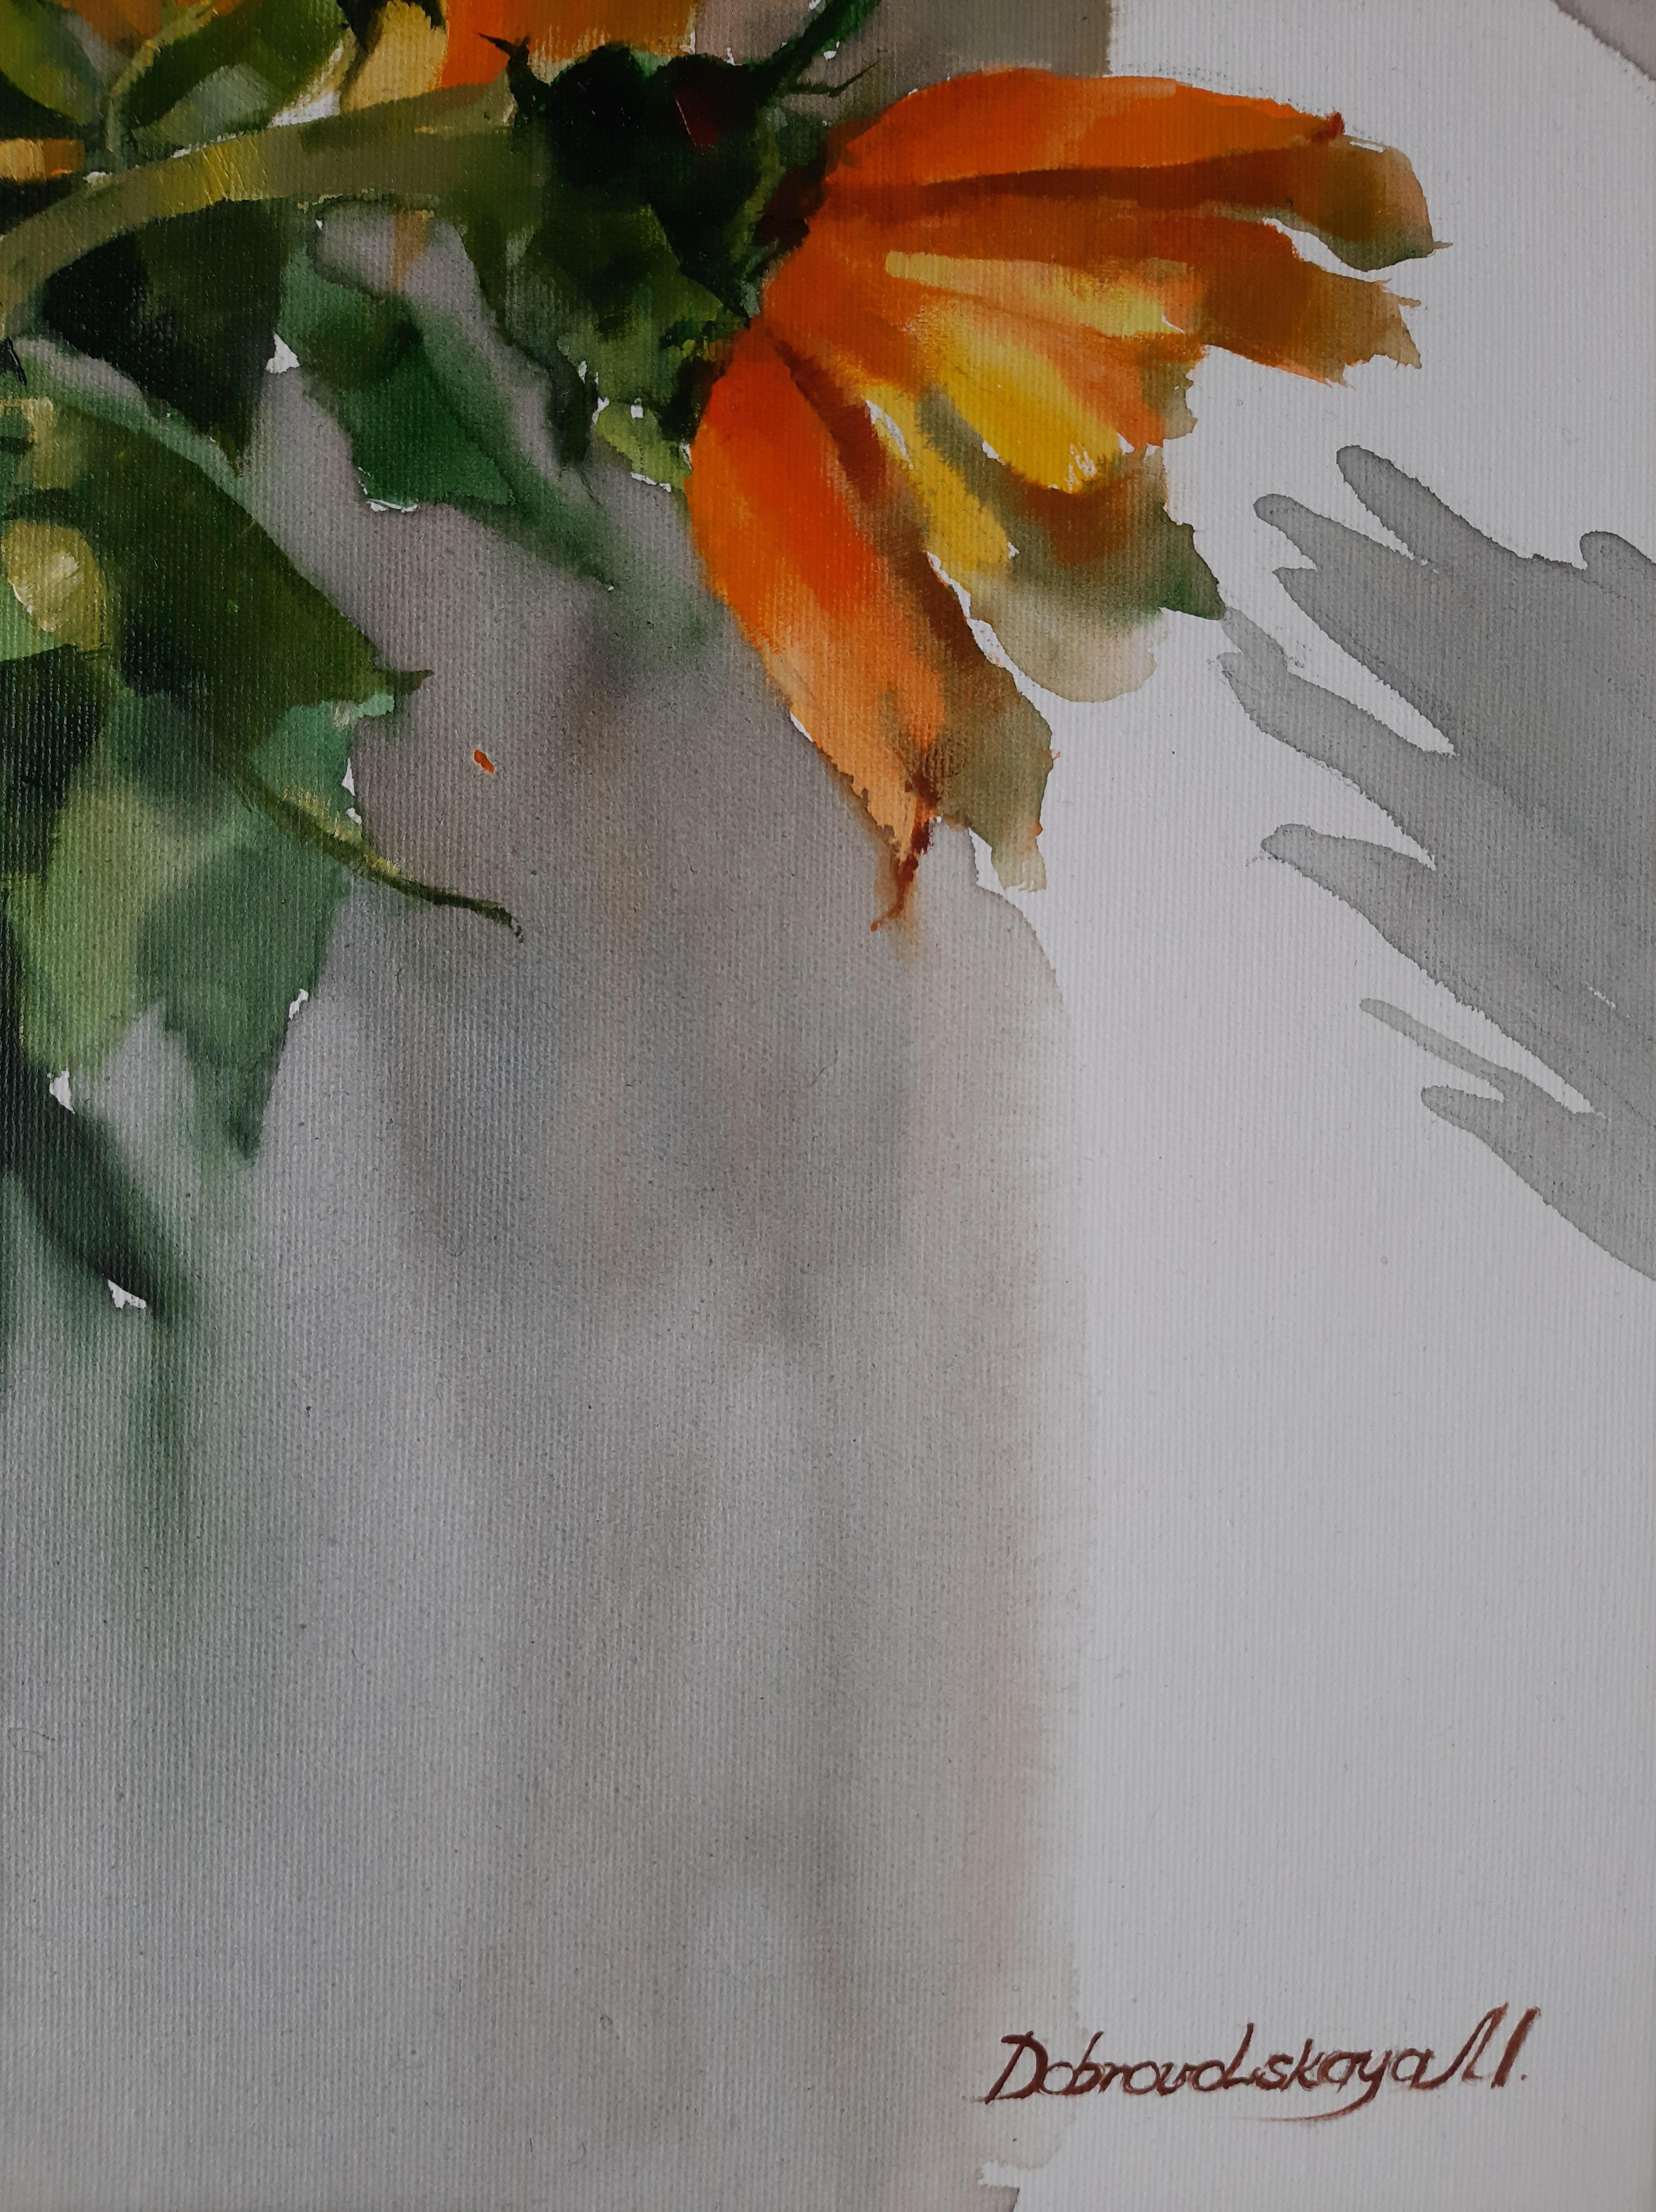 orange flower painting